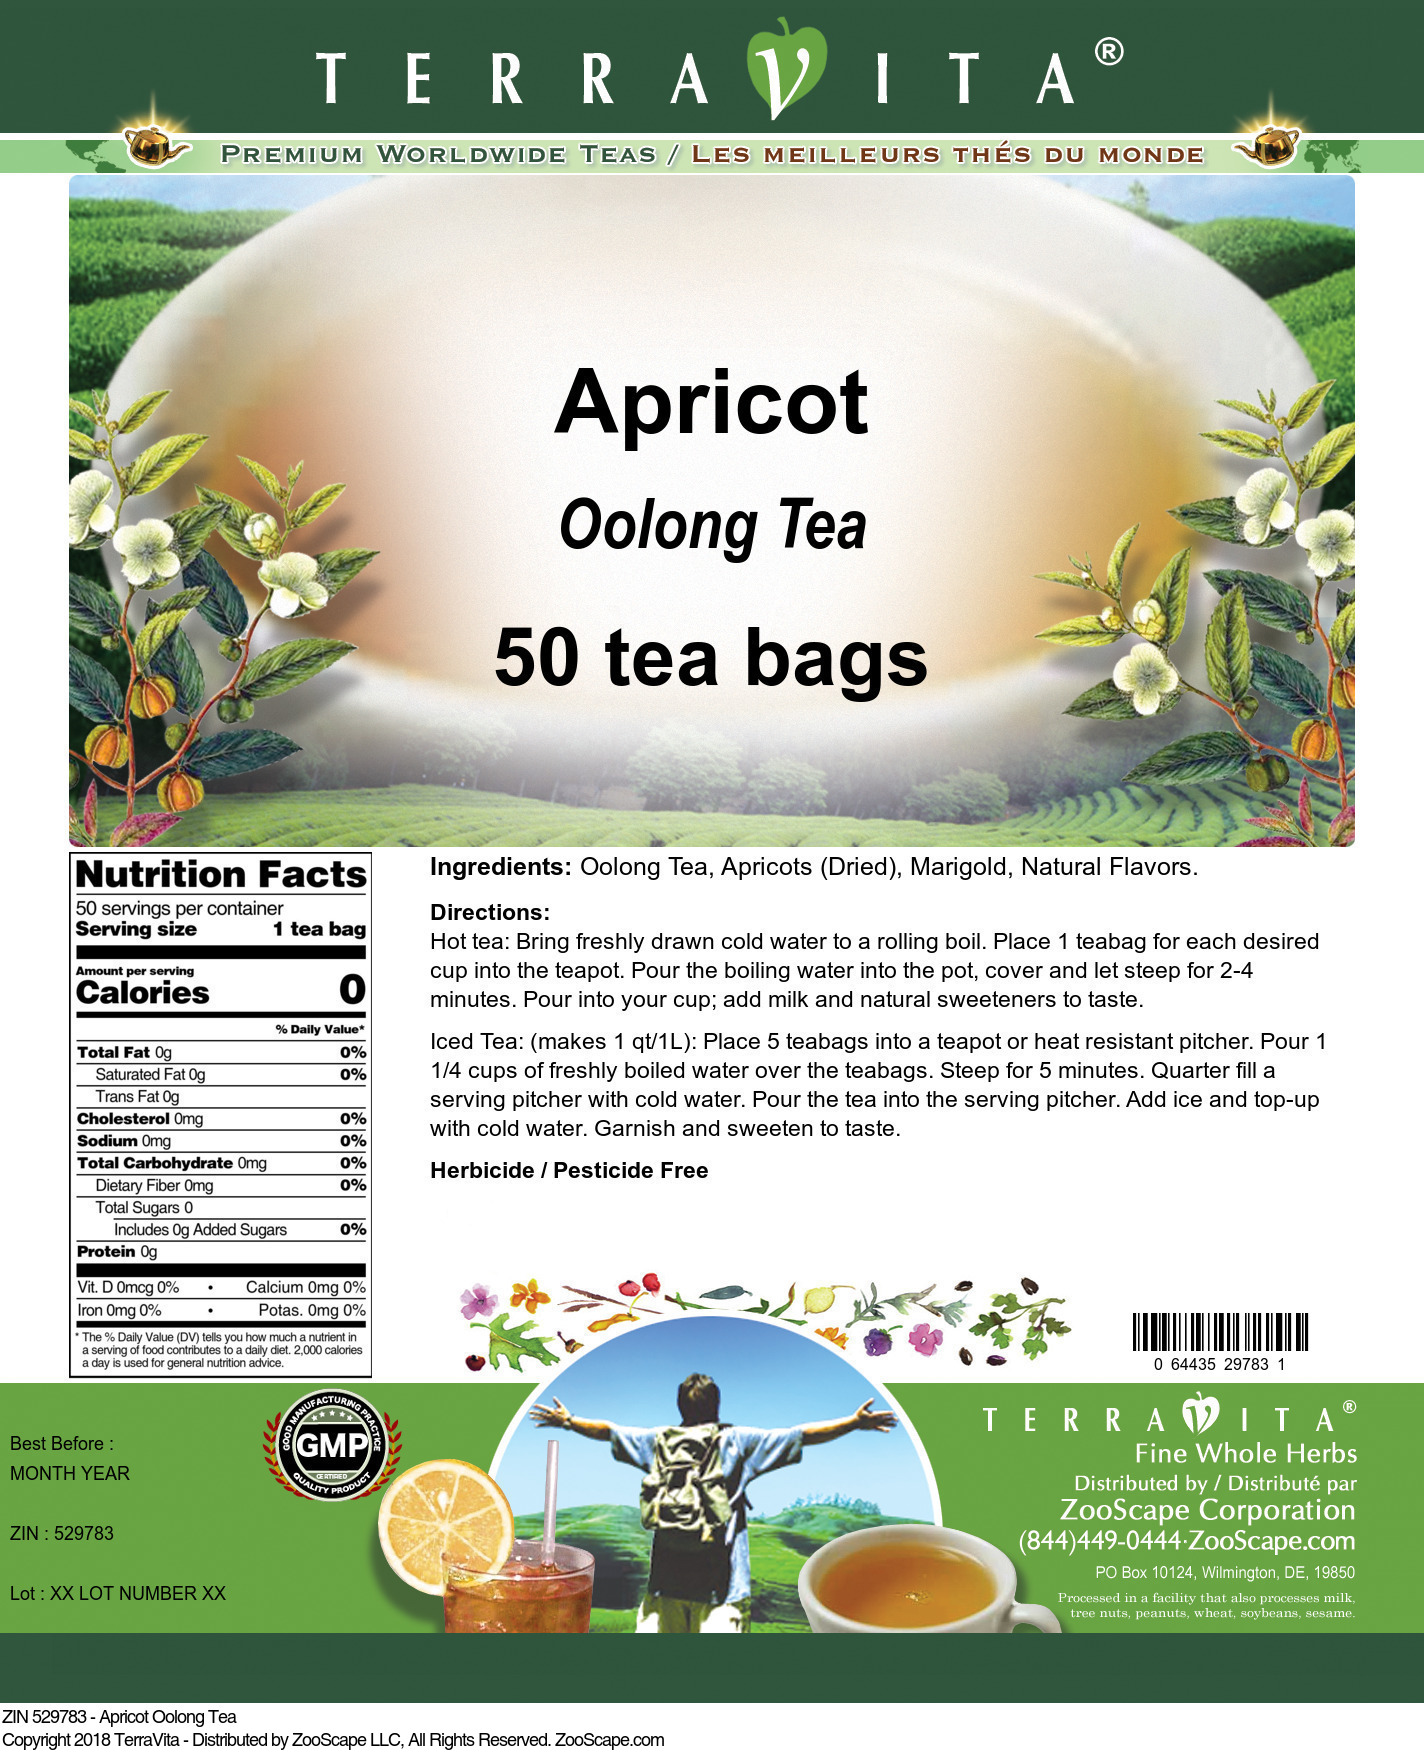 Apricot Oolong Tea - Label